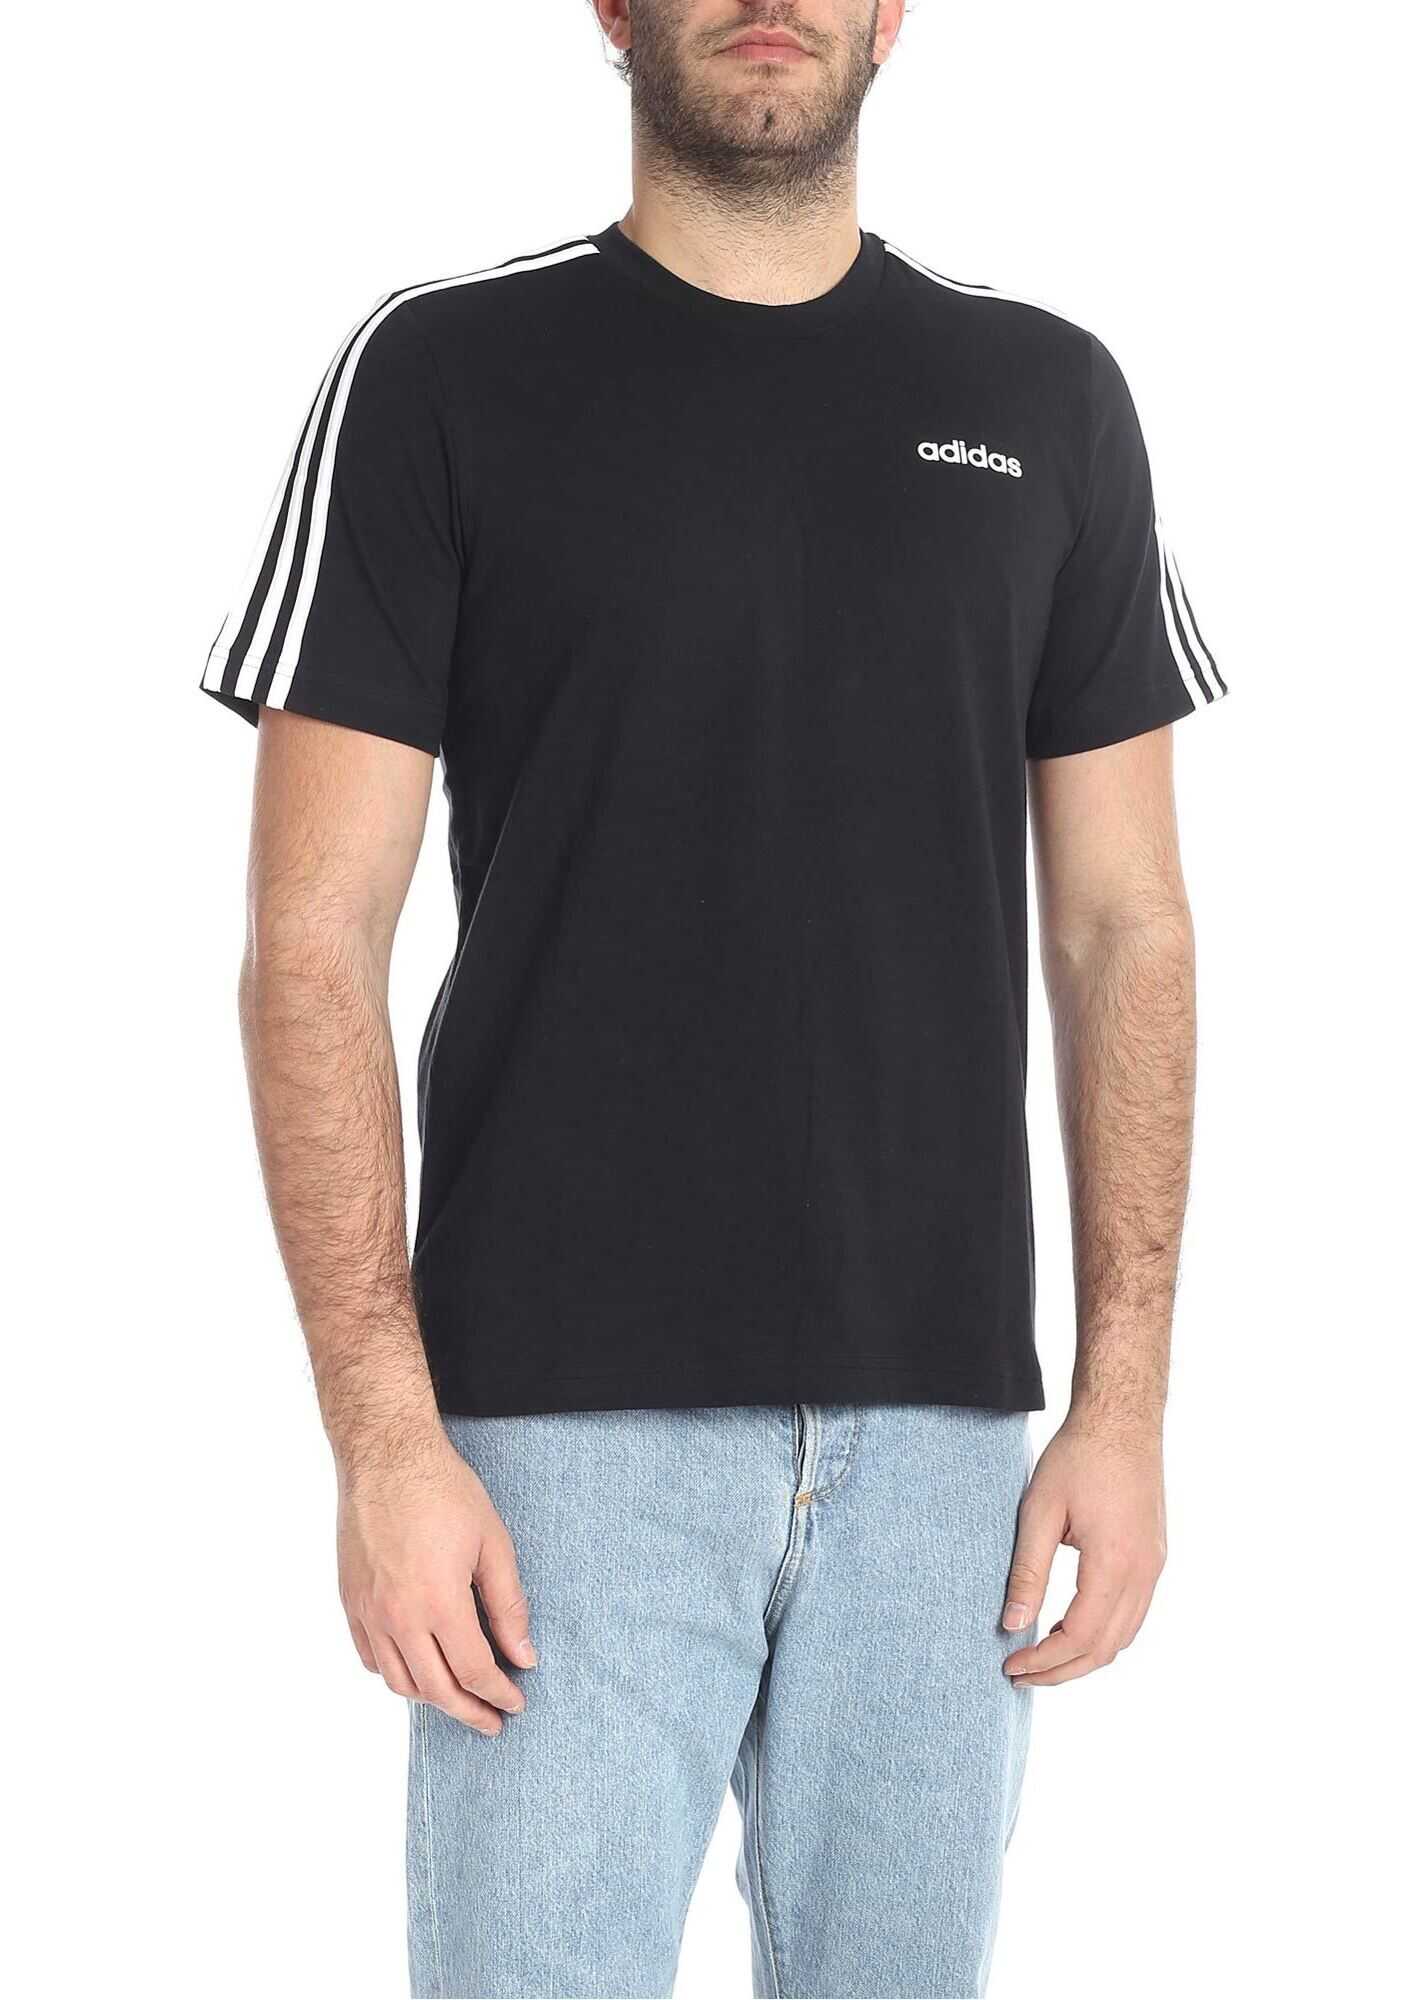 adidas Essentials 3-Stripes Black T-Shirt Black